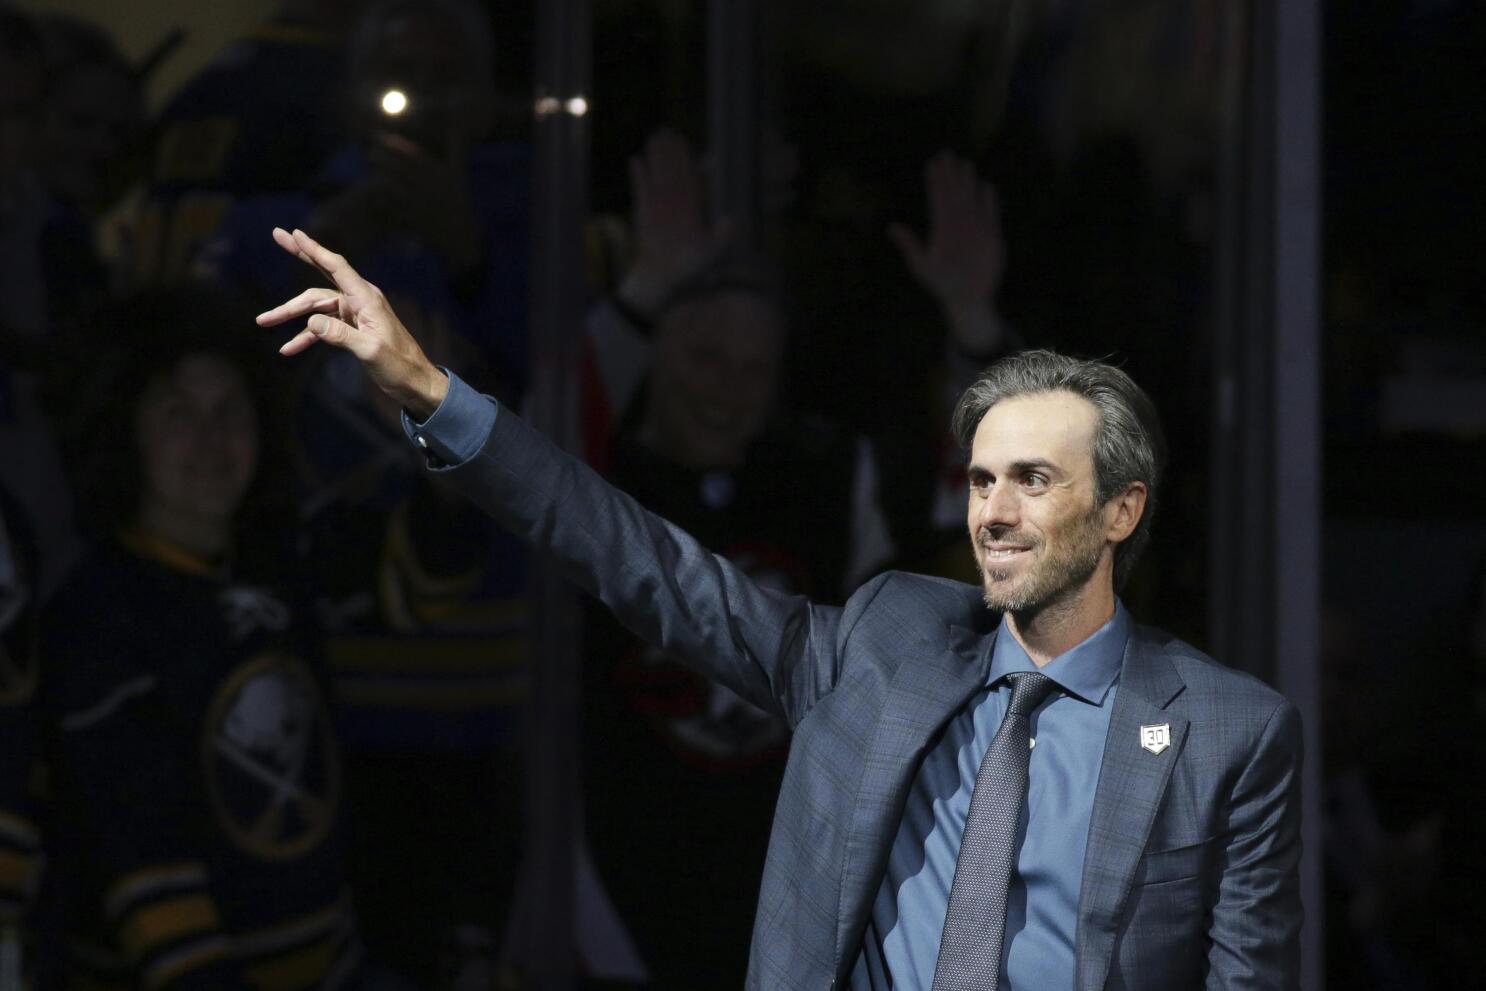 Sabres fans celebrate Ryan Miller in jersey retirement ceremony